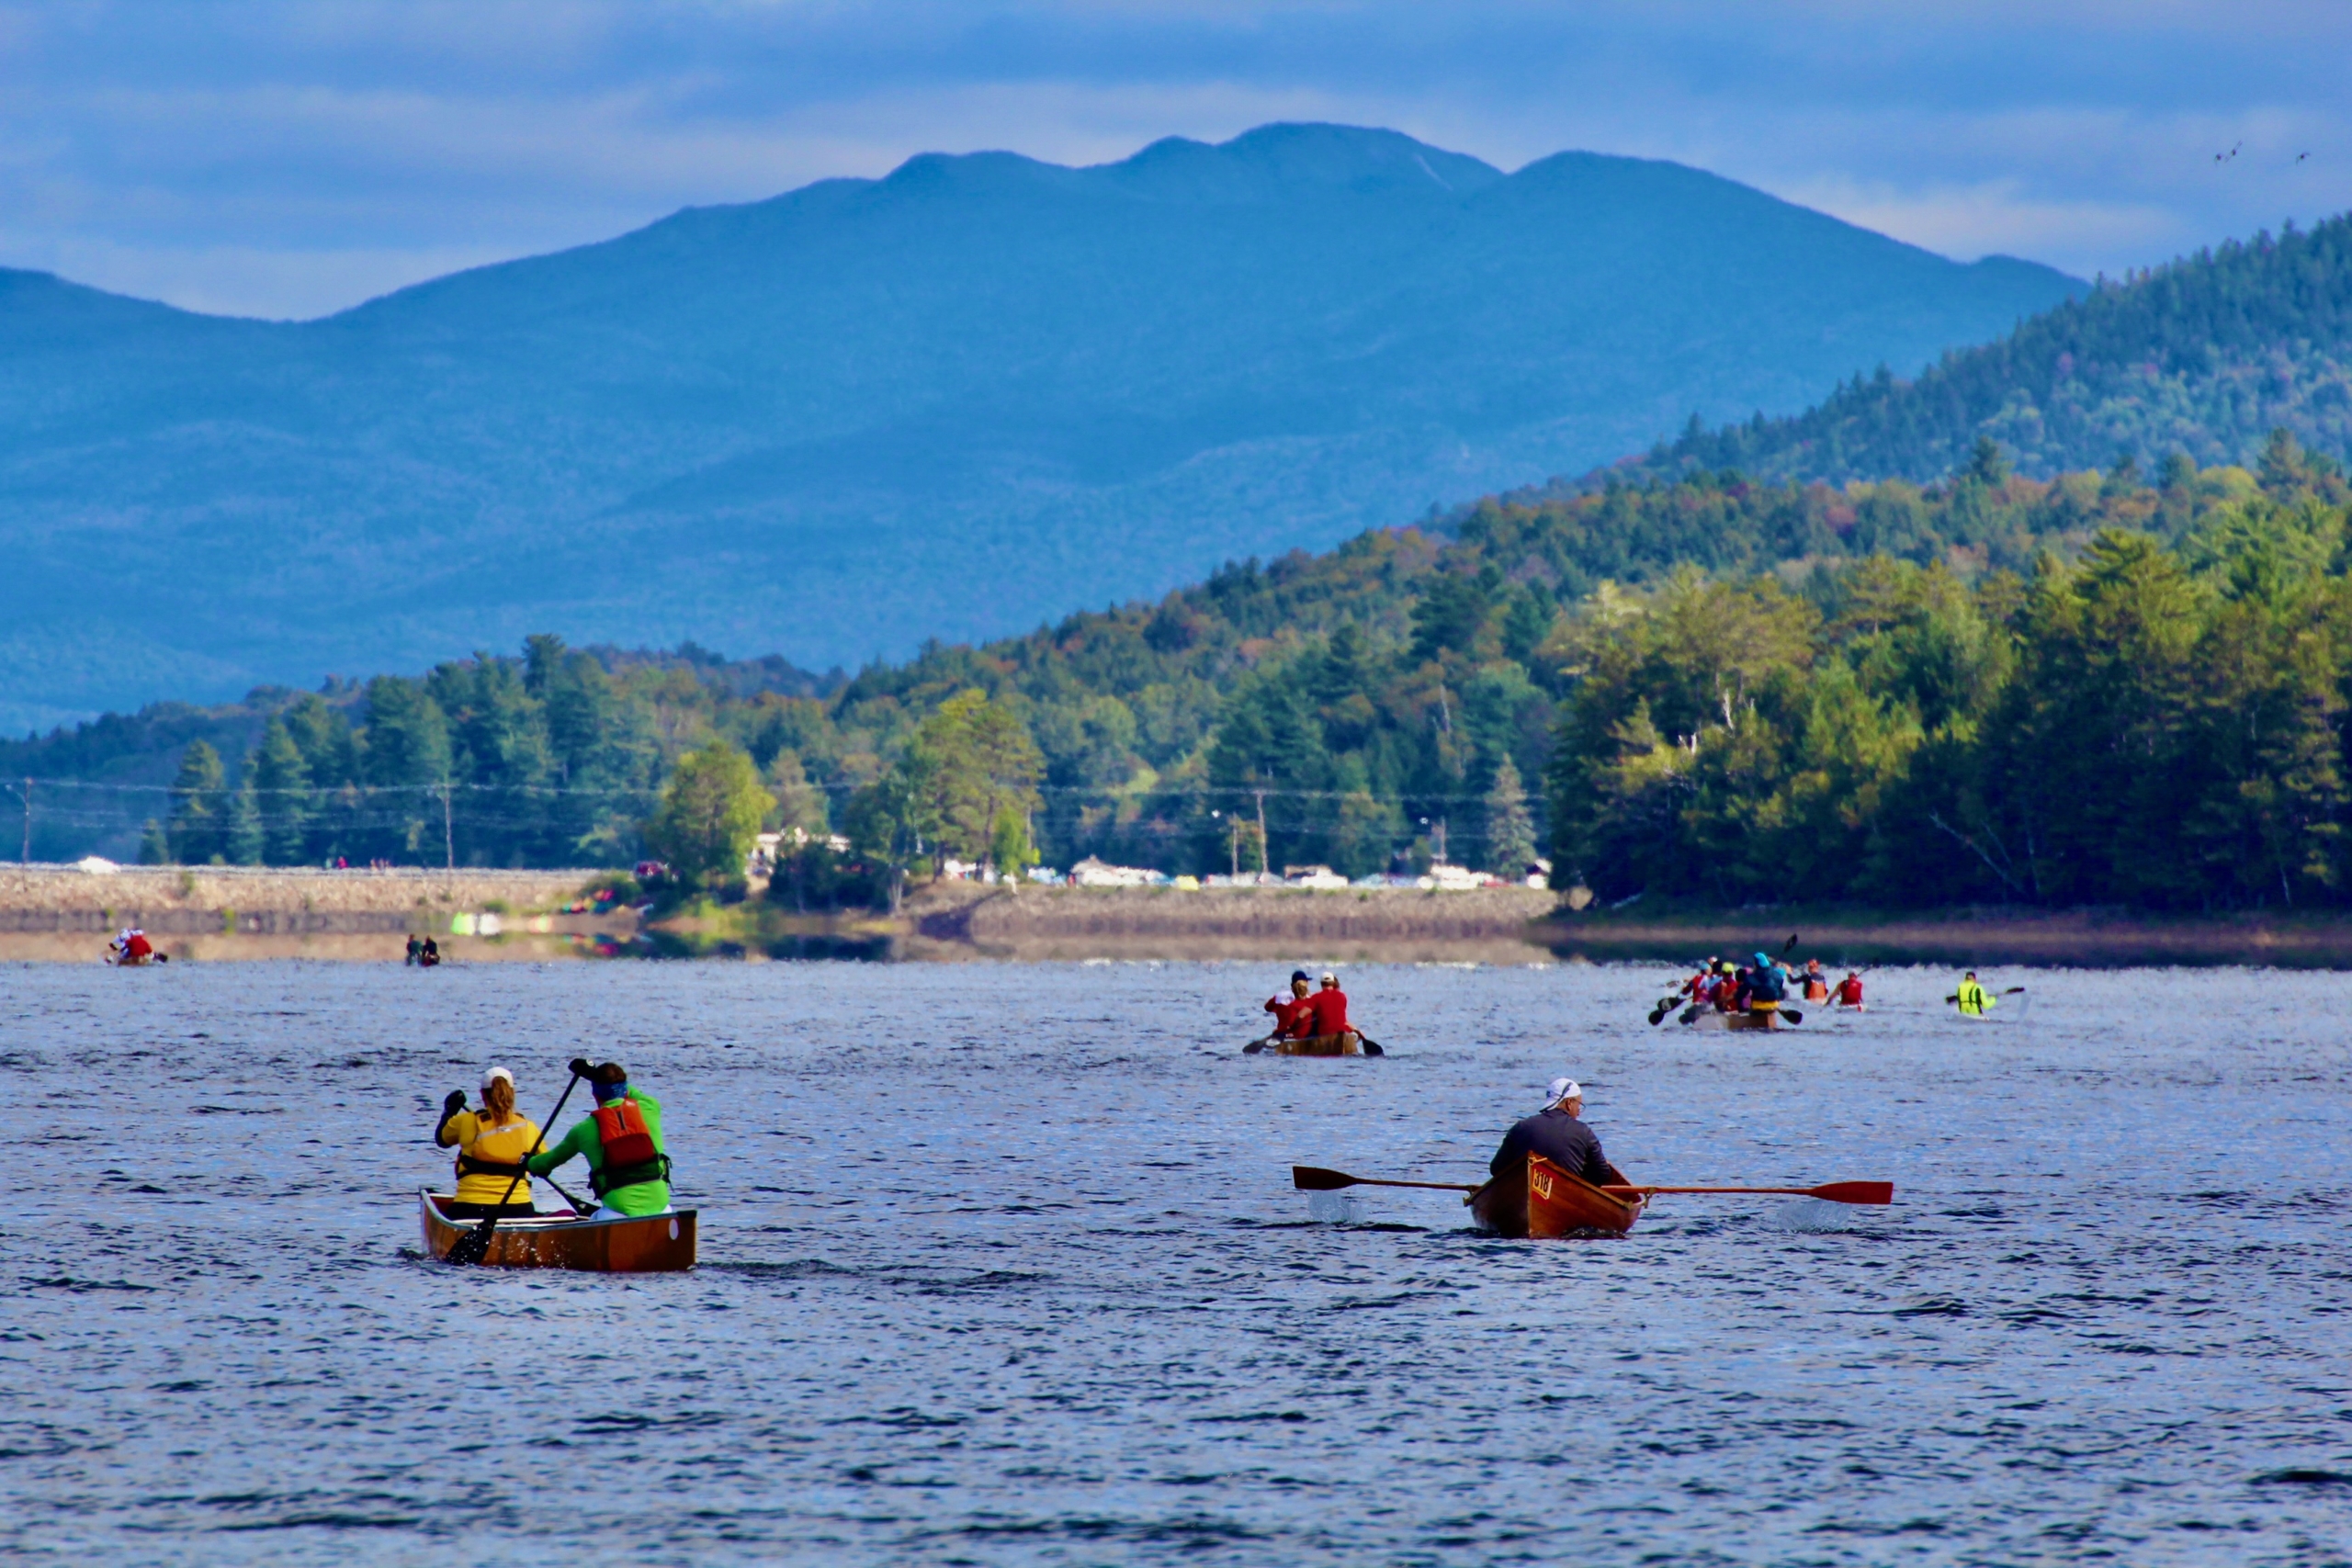 Paddling on Long Lake with several canoes and kayaks